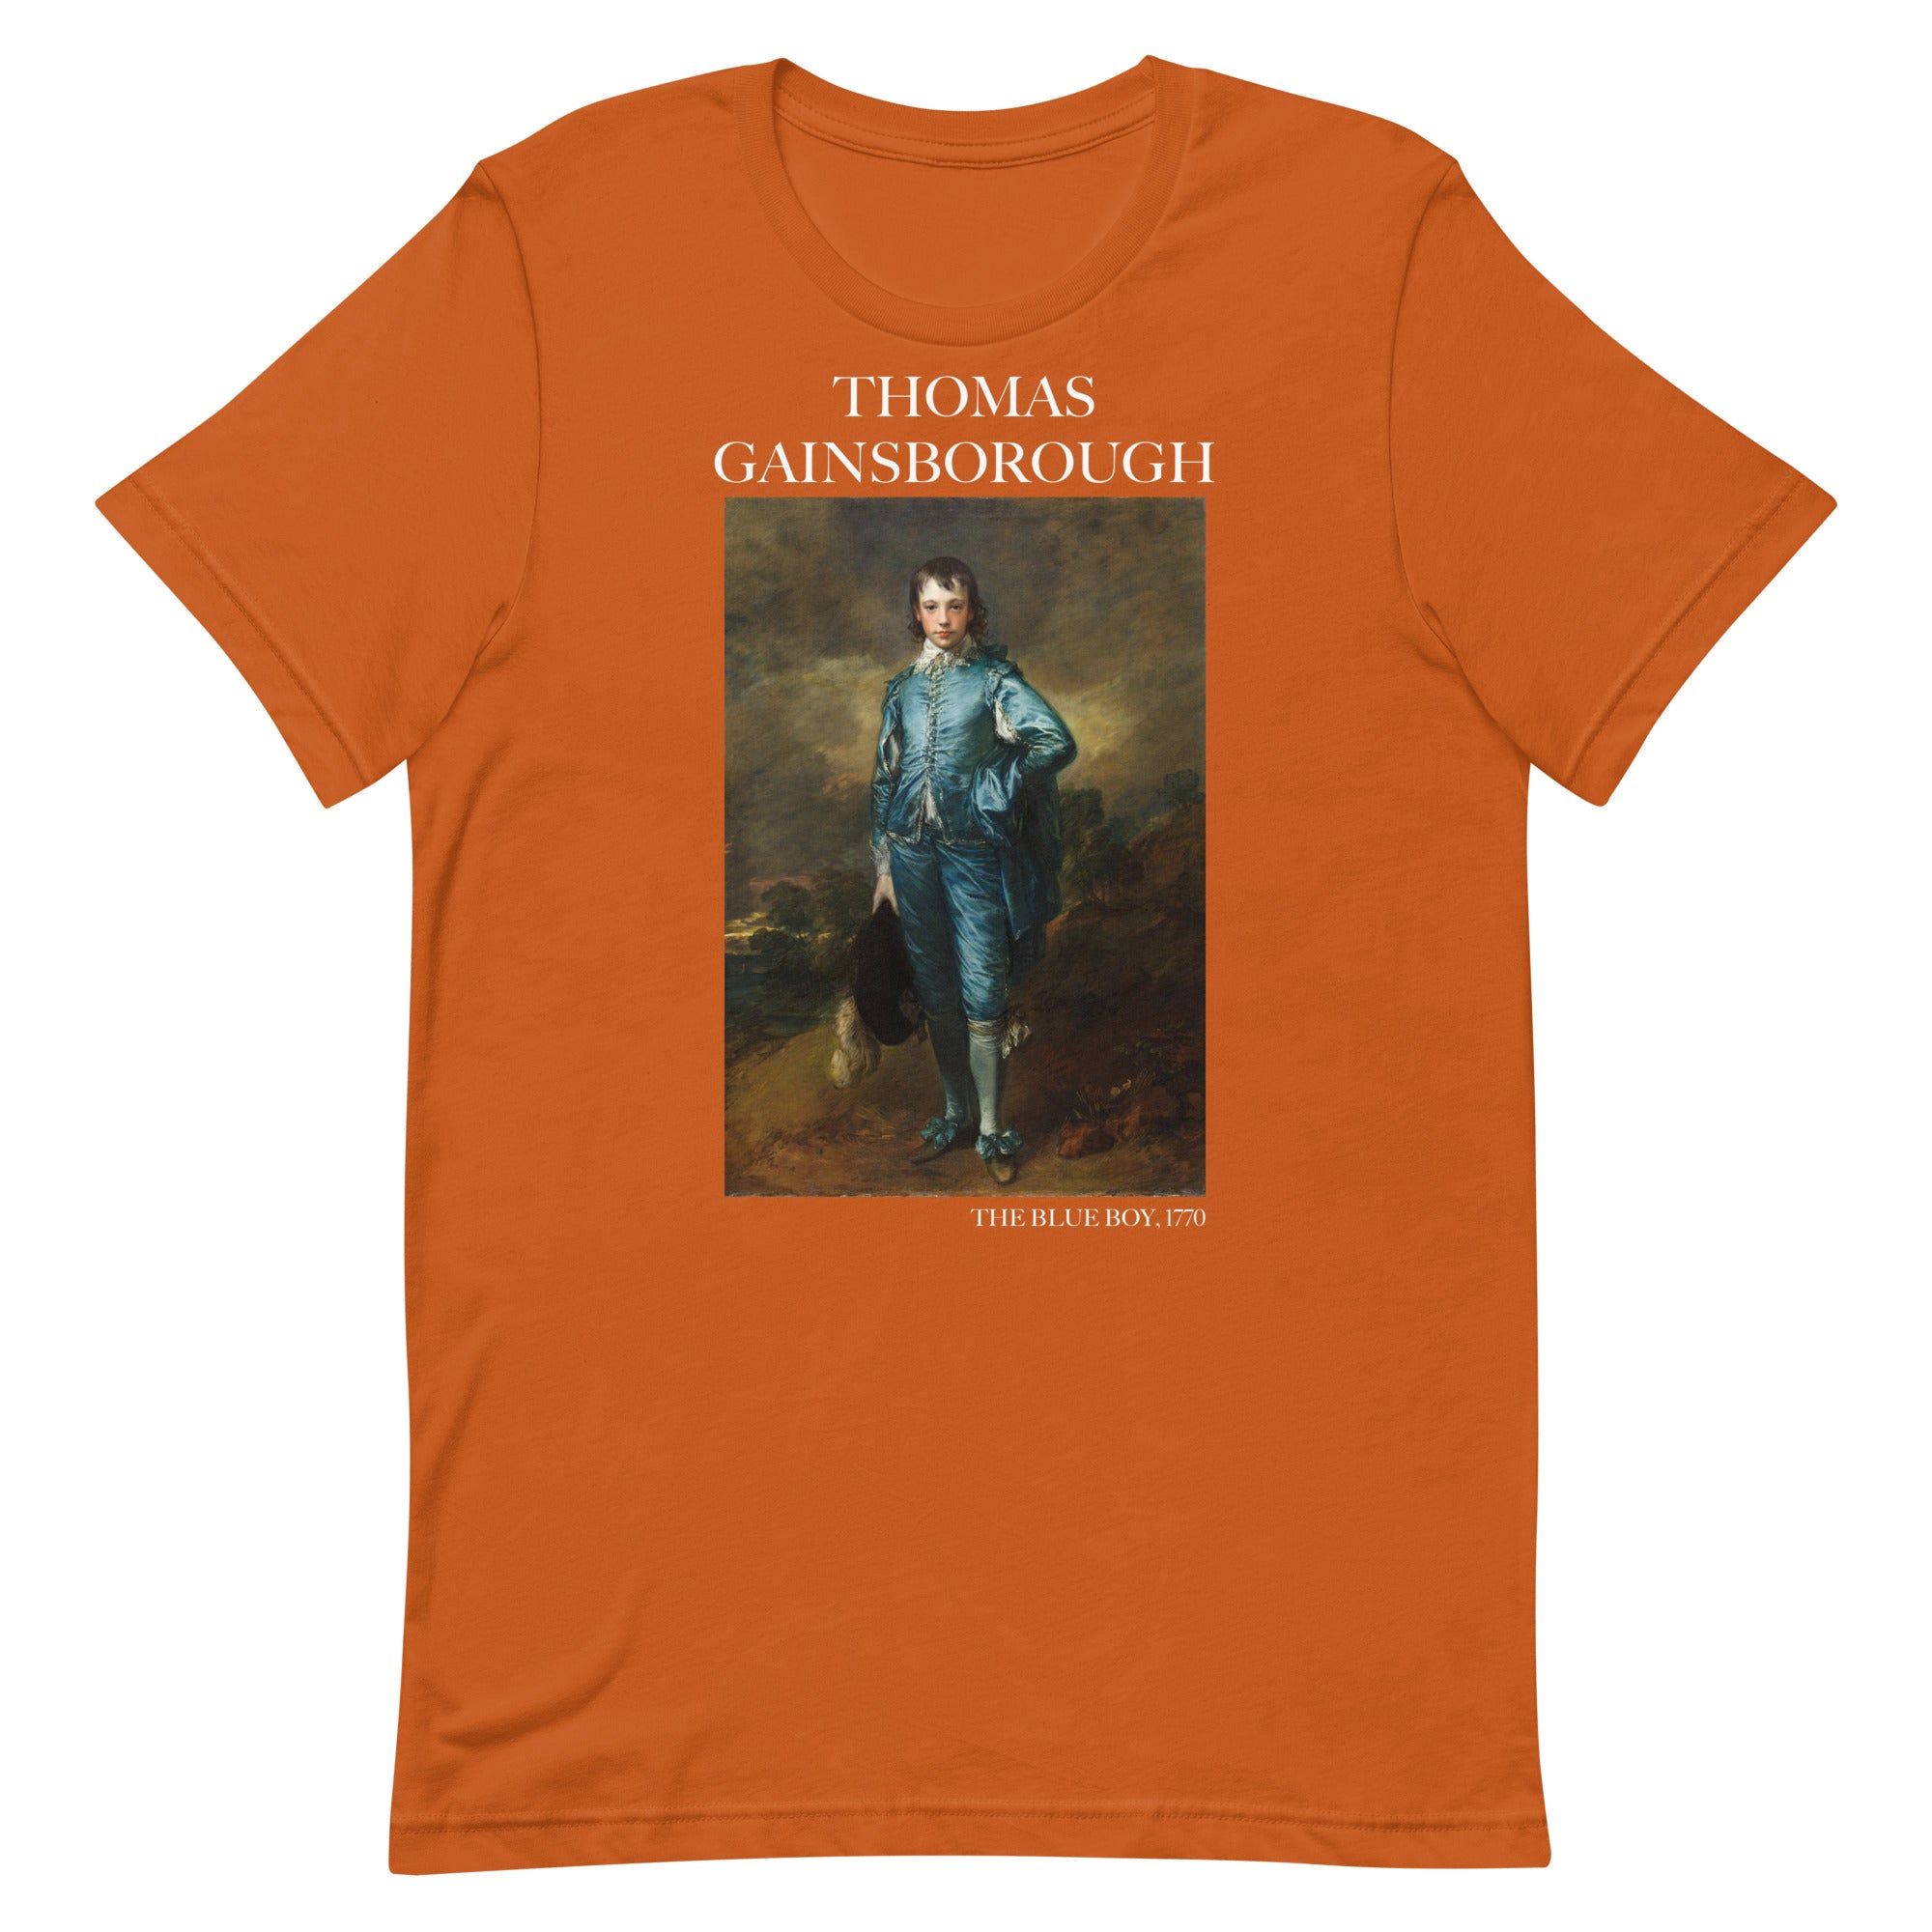 Thomas Gainsborough 'The Blue Boy' Famous Painting T-Shirt | Unisex Classic Art Tee